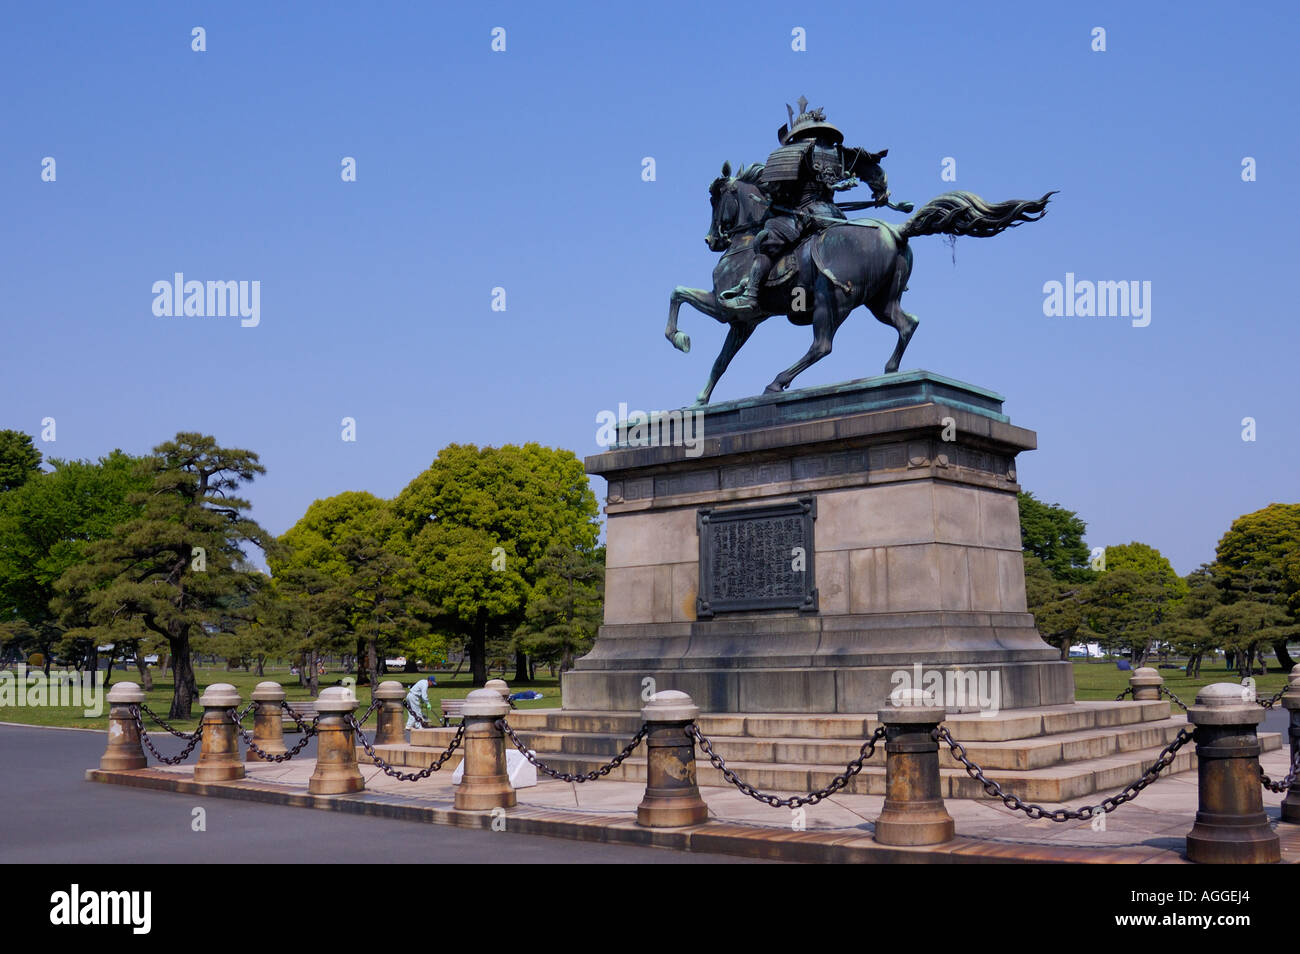 Imperial Palace, Kokyo Garden, statue of Kusunoki Masashige (Samurai Warrior), Tokyo, Japan Stock Photo